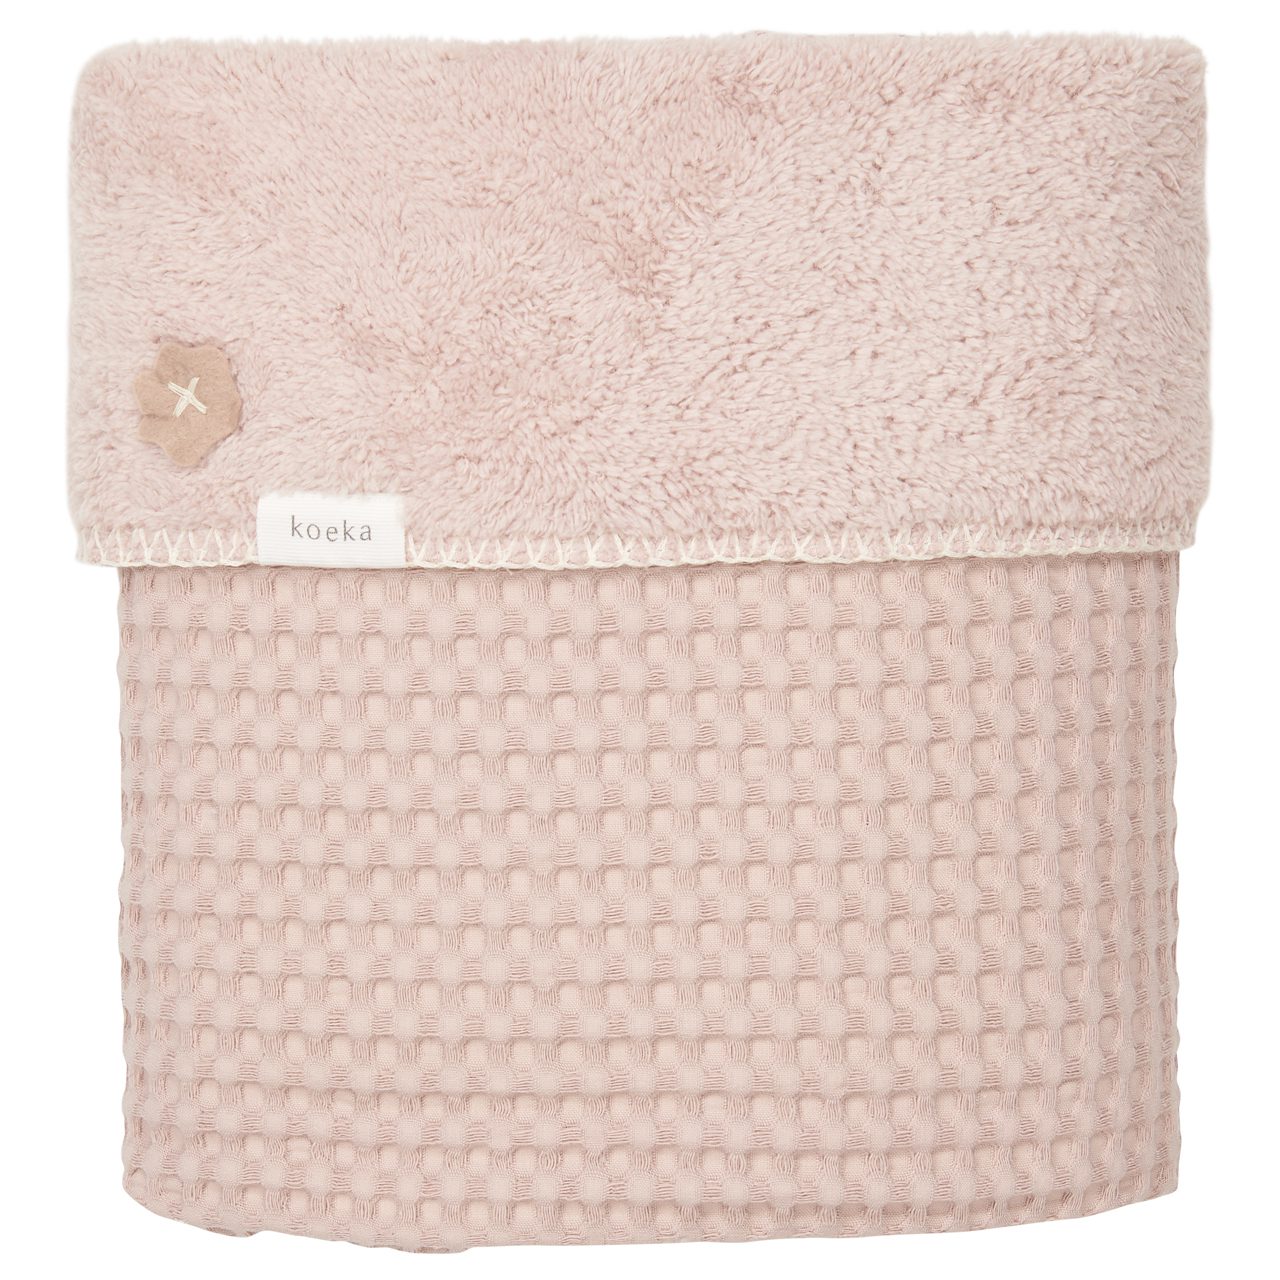 Batanije  bassinet pellushi gri ne roz\bassinet blanket teddy oslo grey pink-Koeka